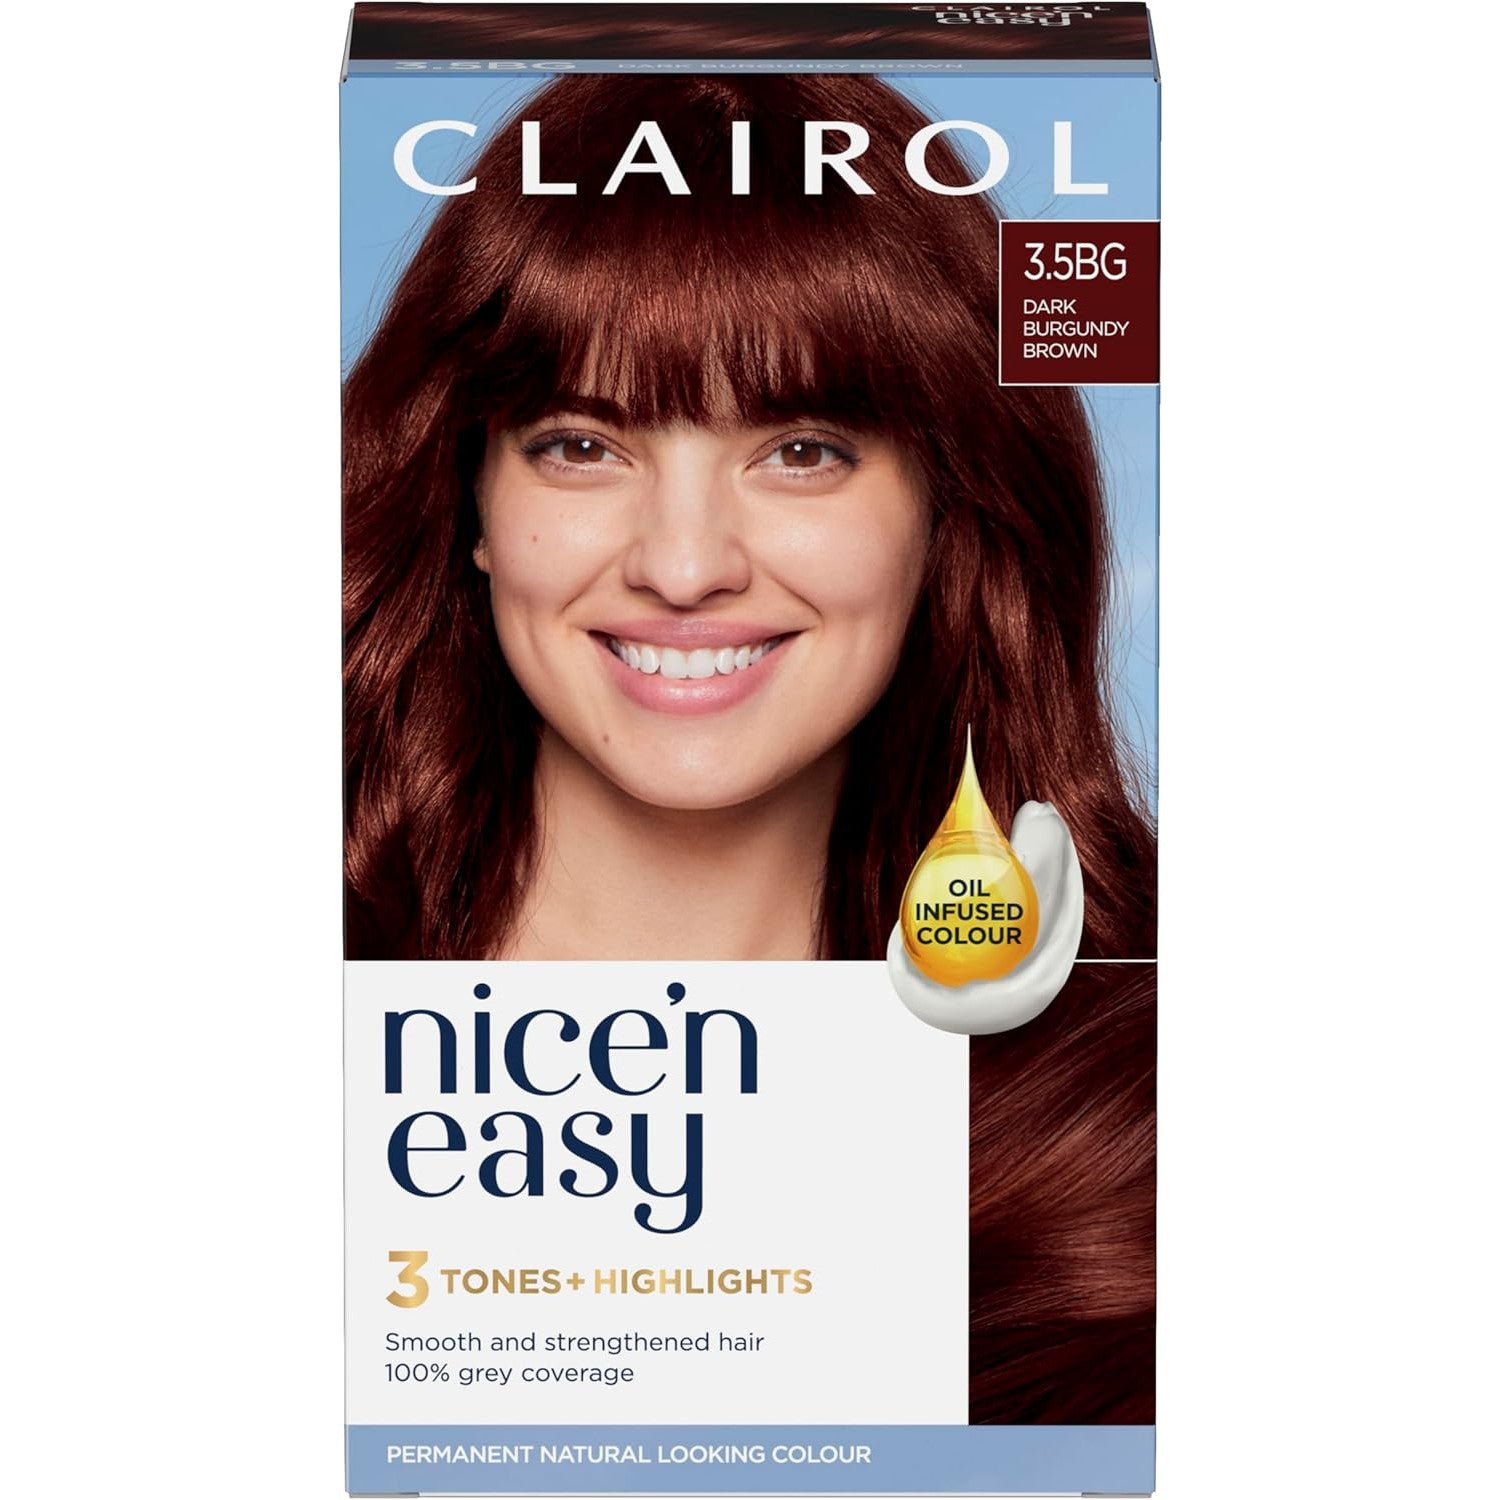 Clairol Nice'n Easy Crème, Permanent Hair Dye, 3.5BG Dark Burgundy Brown